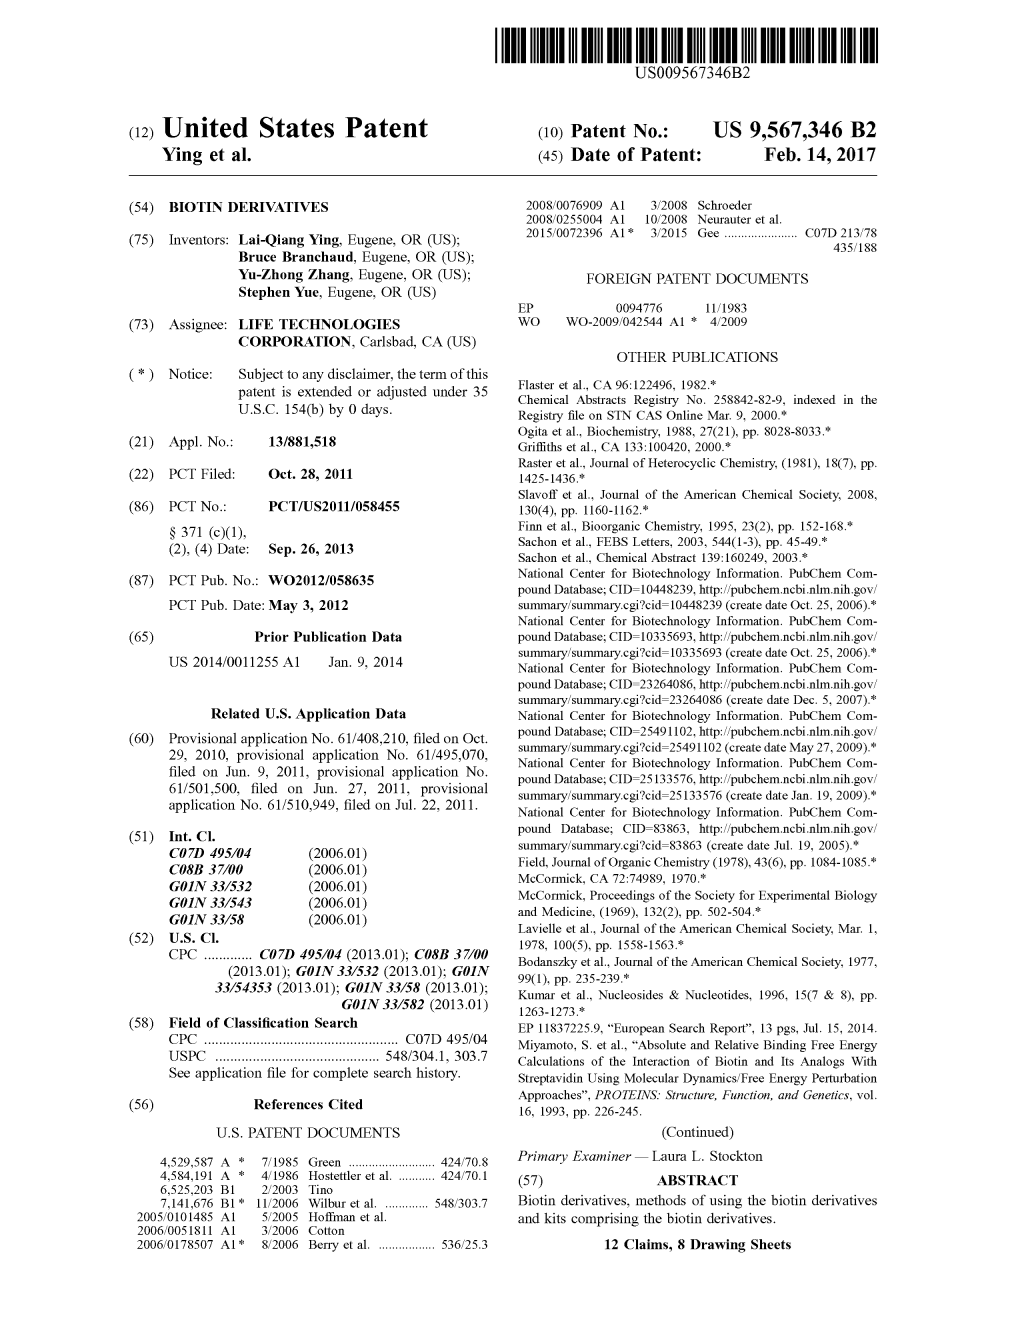 (12) United States Patent (10) Patent No.: US 9,567,346 B2 Ying Et Al